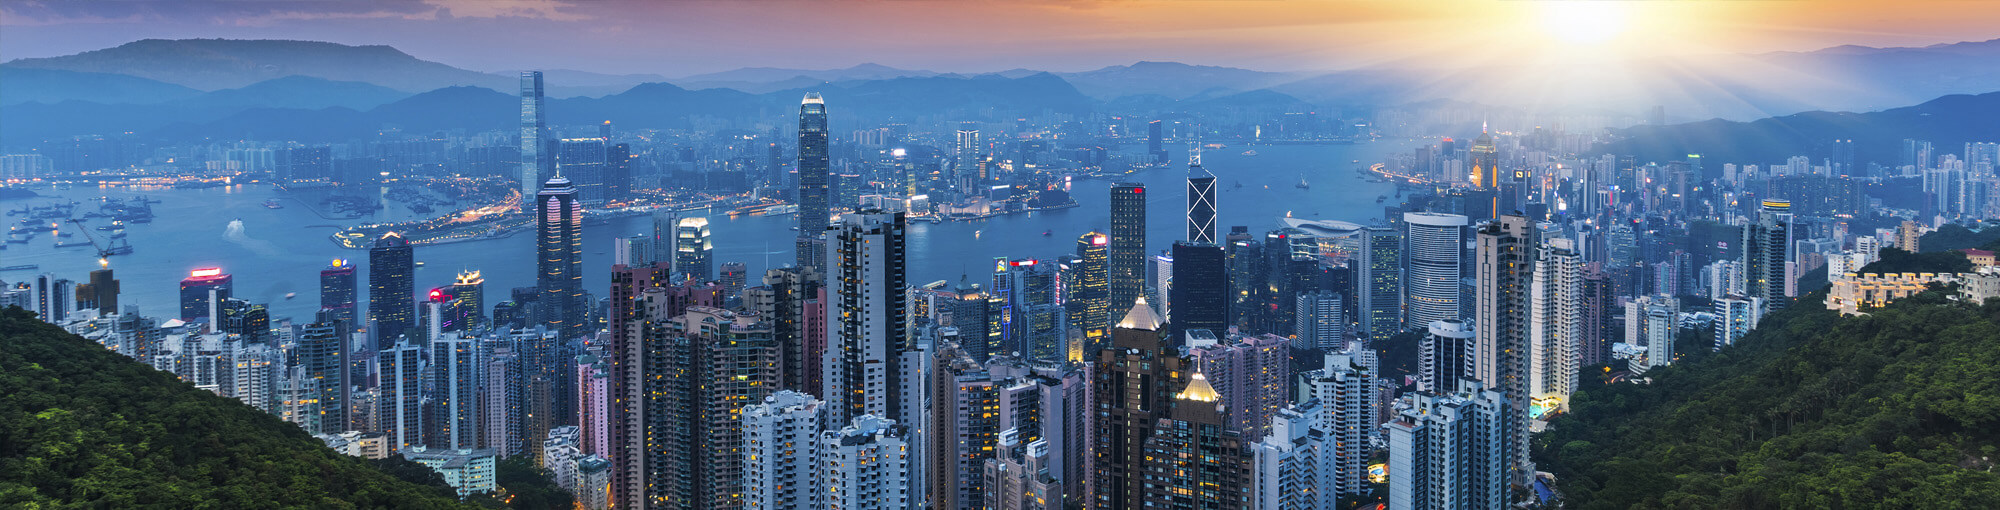 mwi-hongkong-skyline